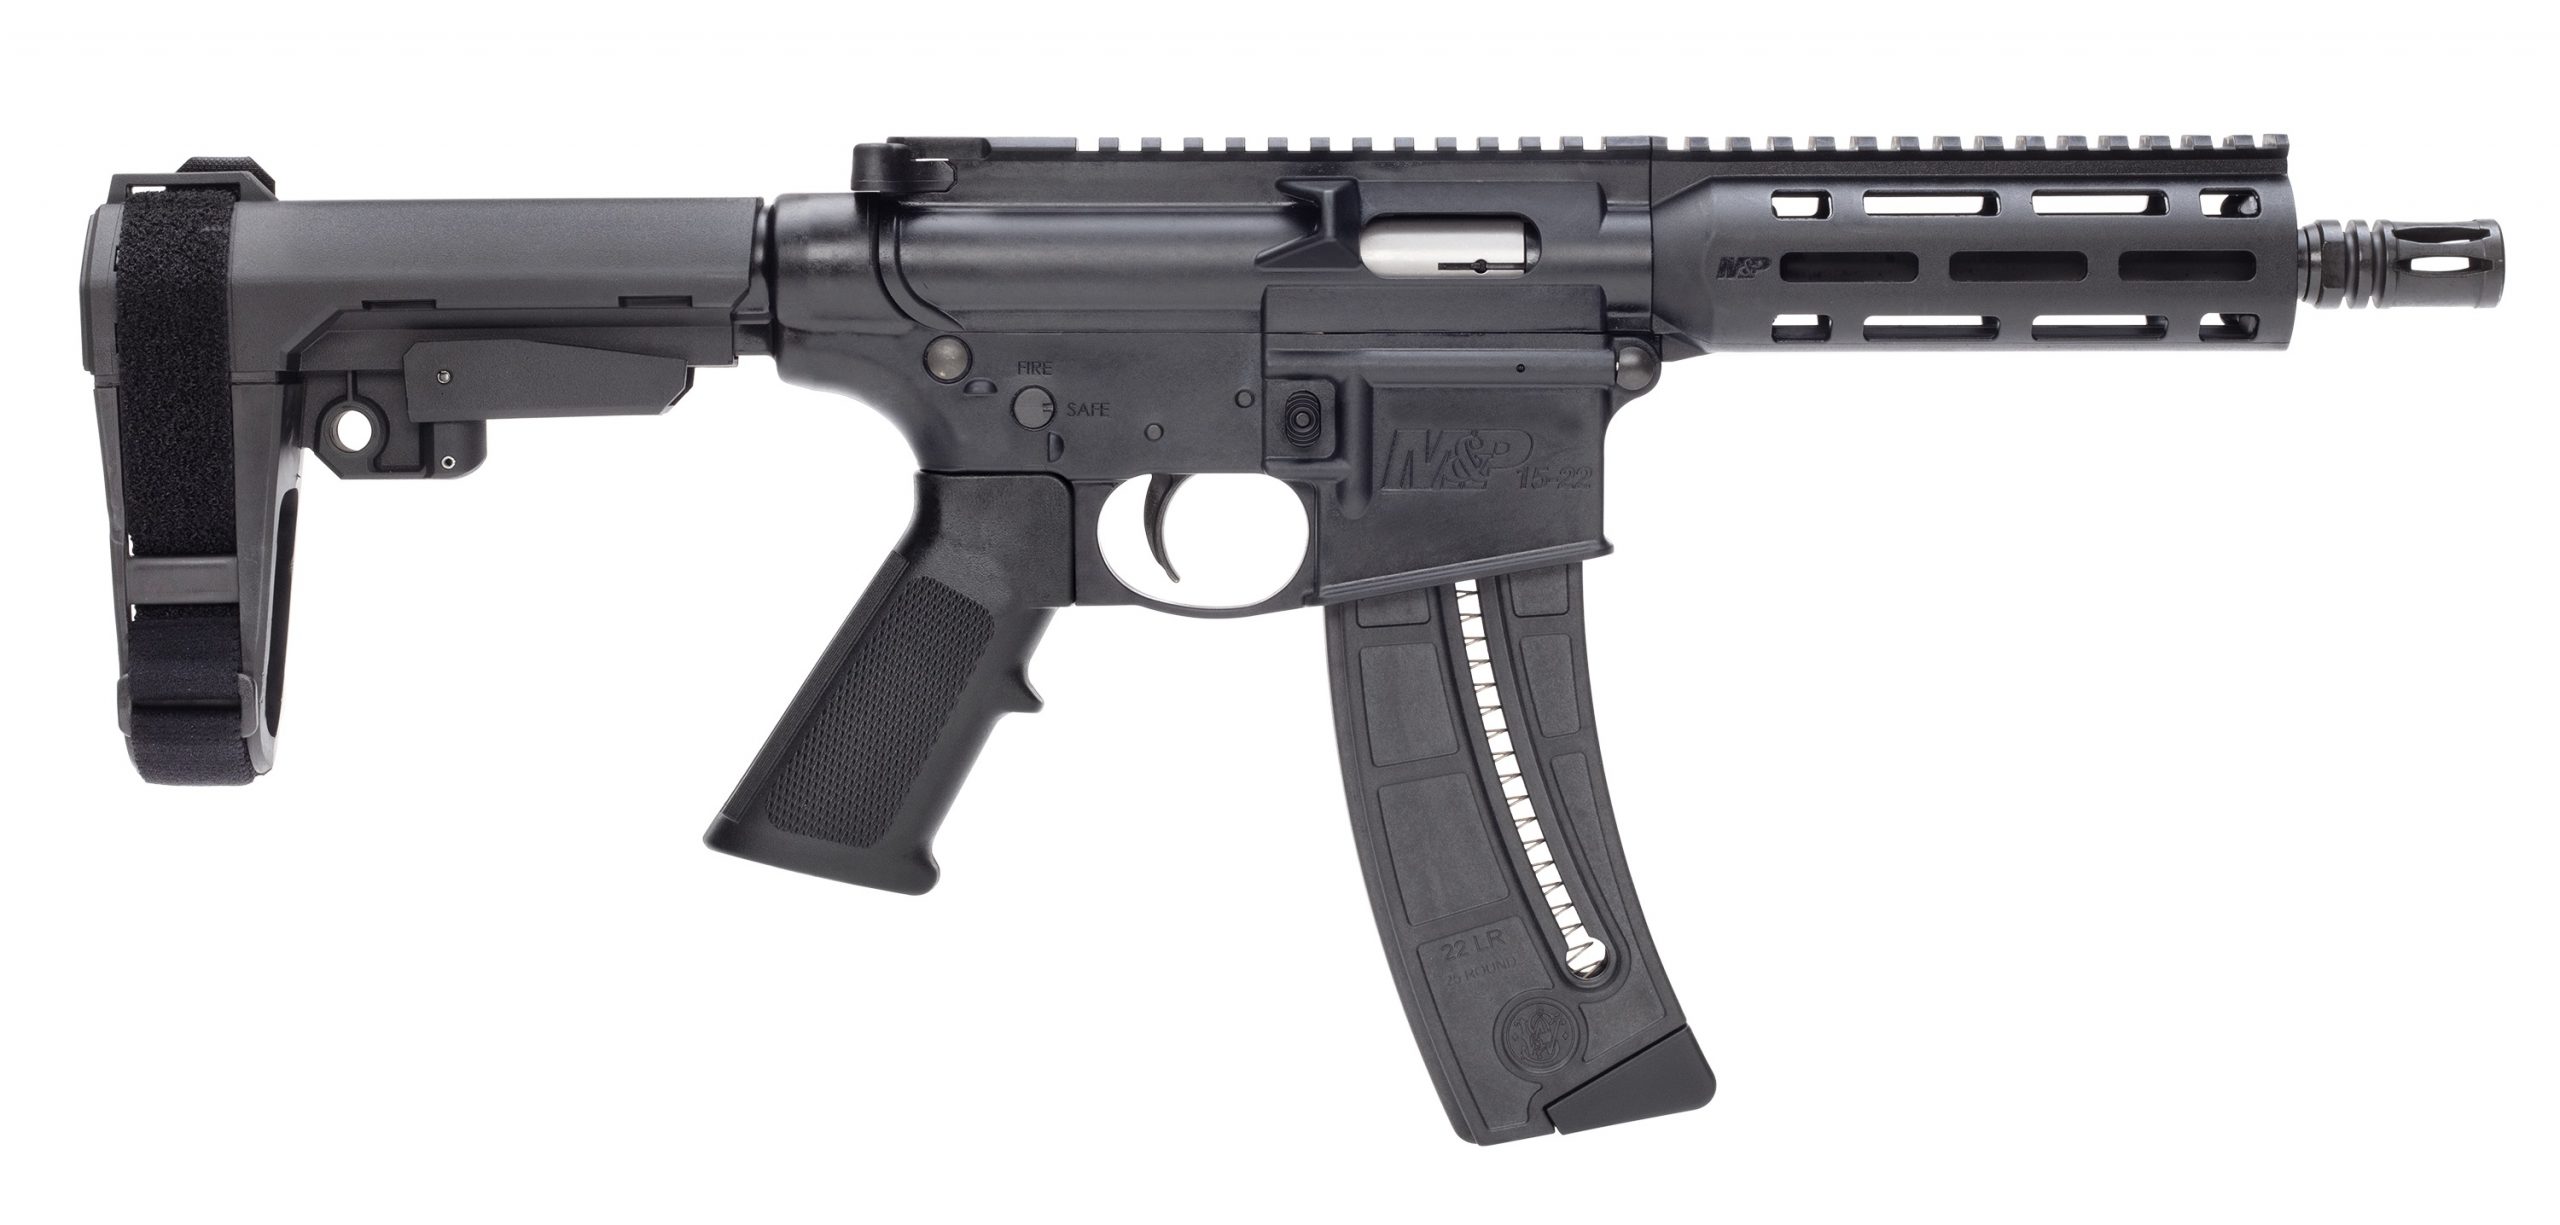 Smith & Wesson M&P 15-22LR AR Pistol: A Comprehensive Review - News ...